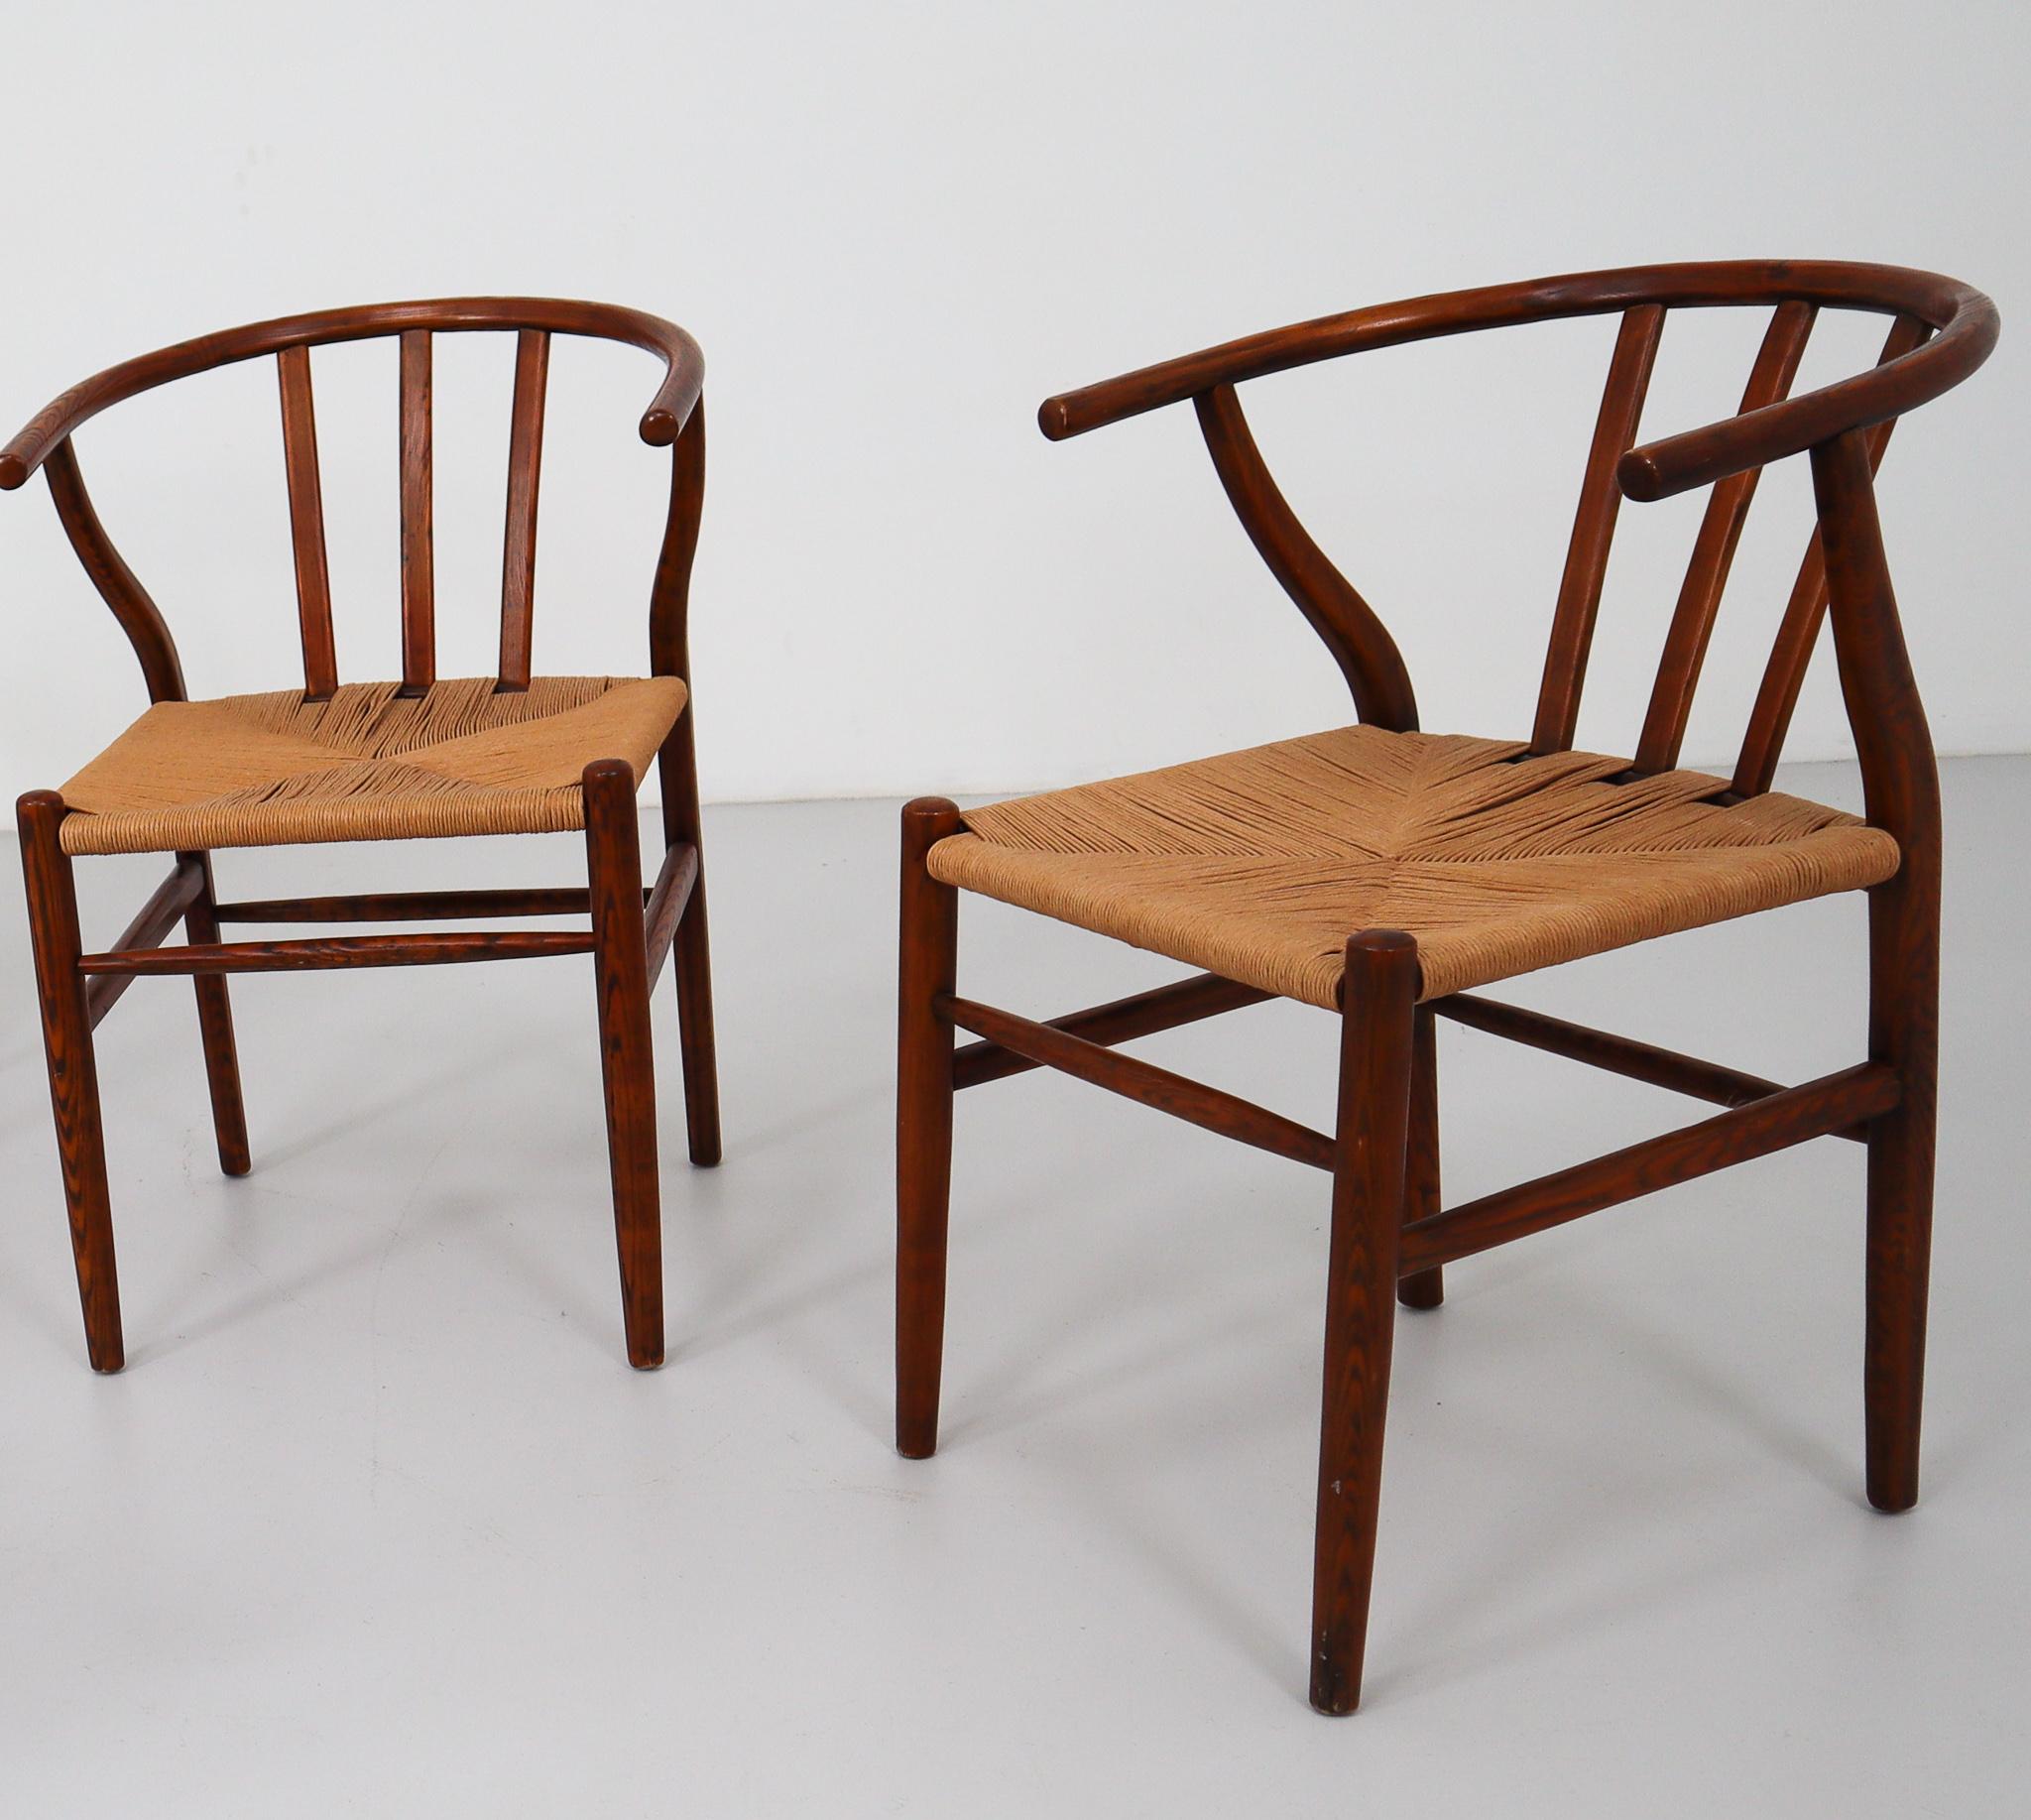 Four Danish Oak Armchairs with Handwoven Paper cord Seats, 1960s (Papierkordel)